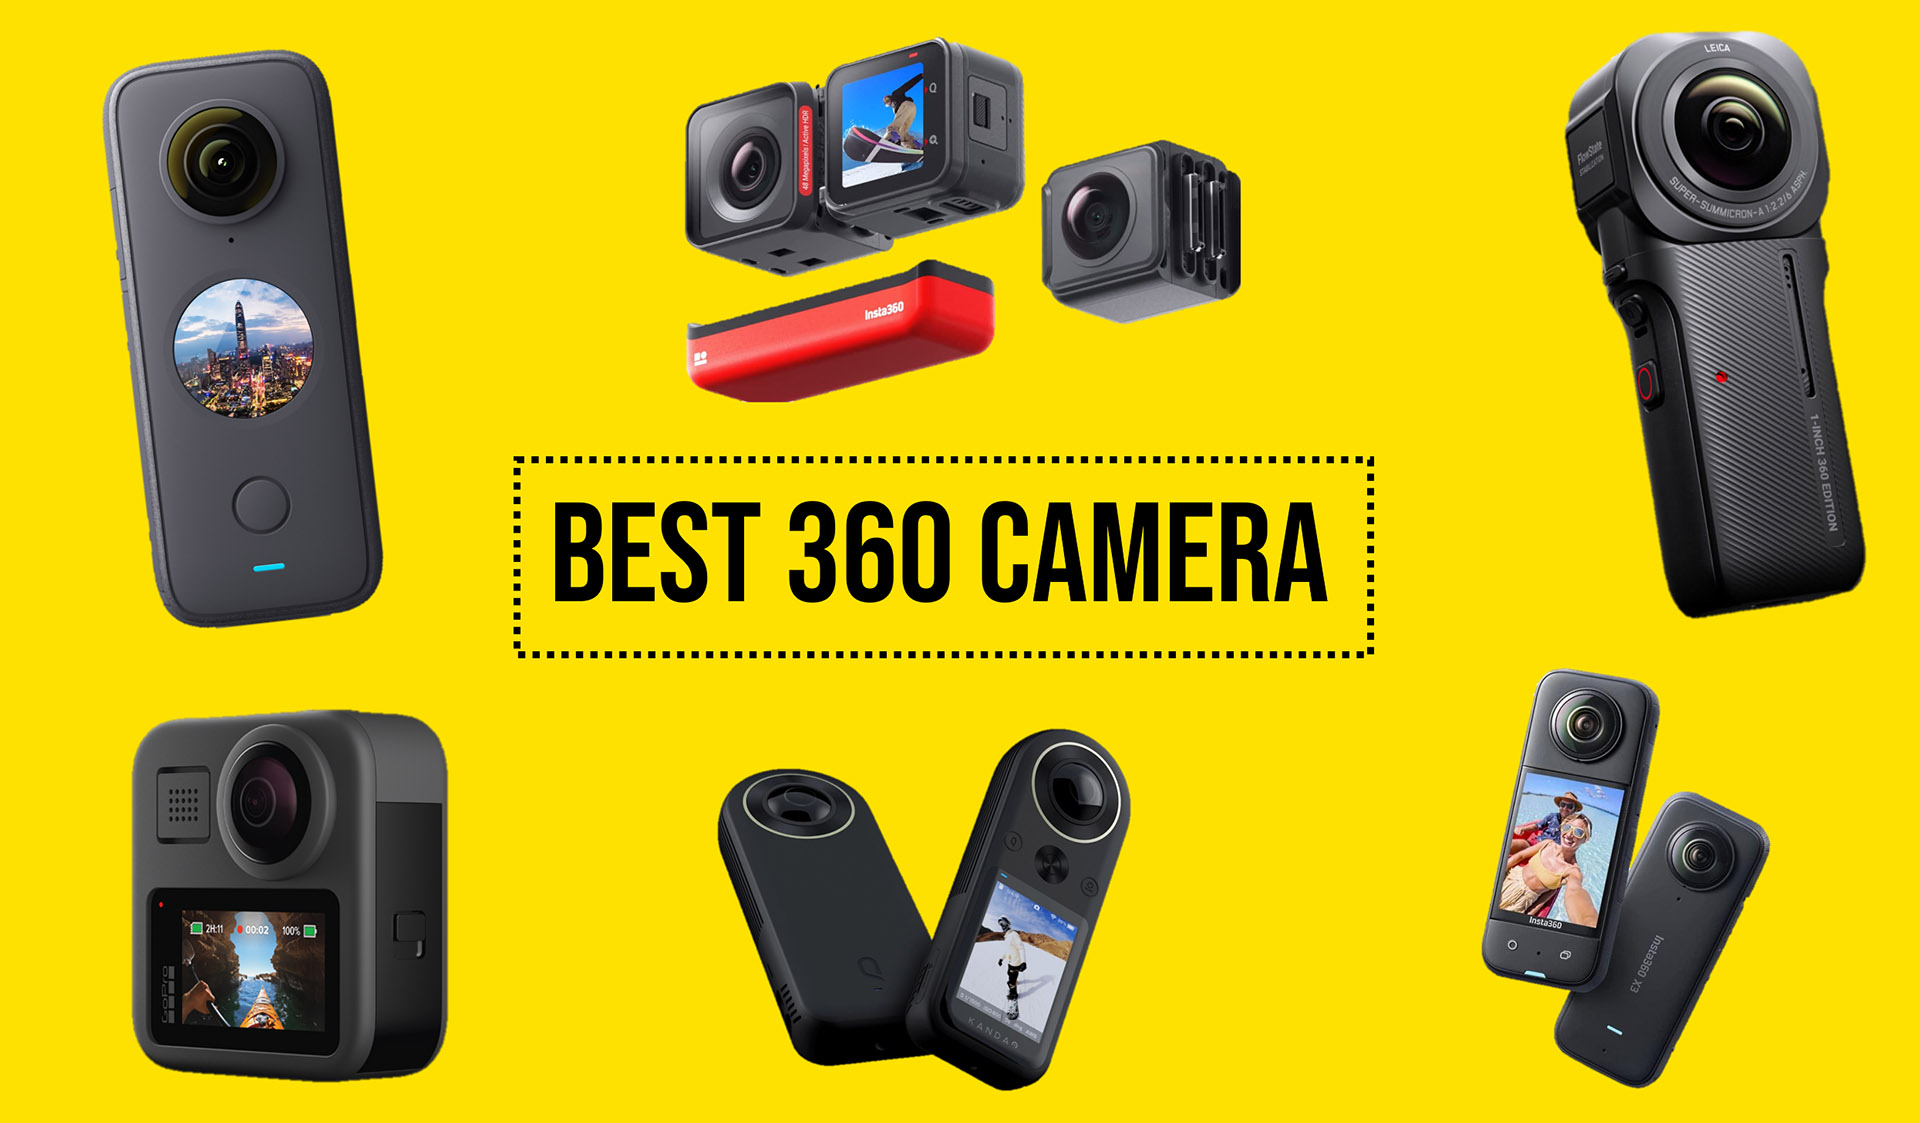 Best 360 camera, Take advantage of the 360° video technology